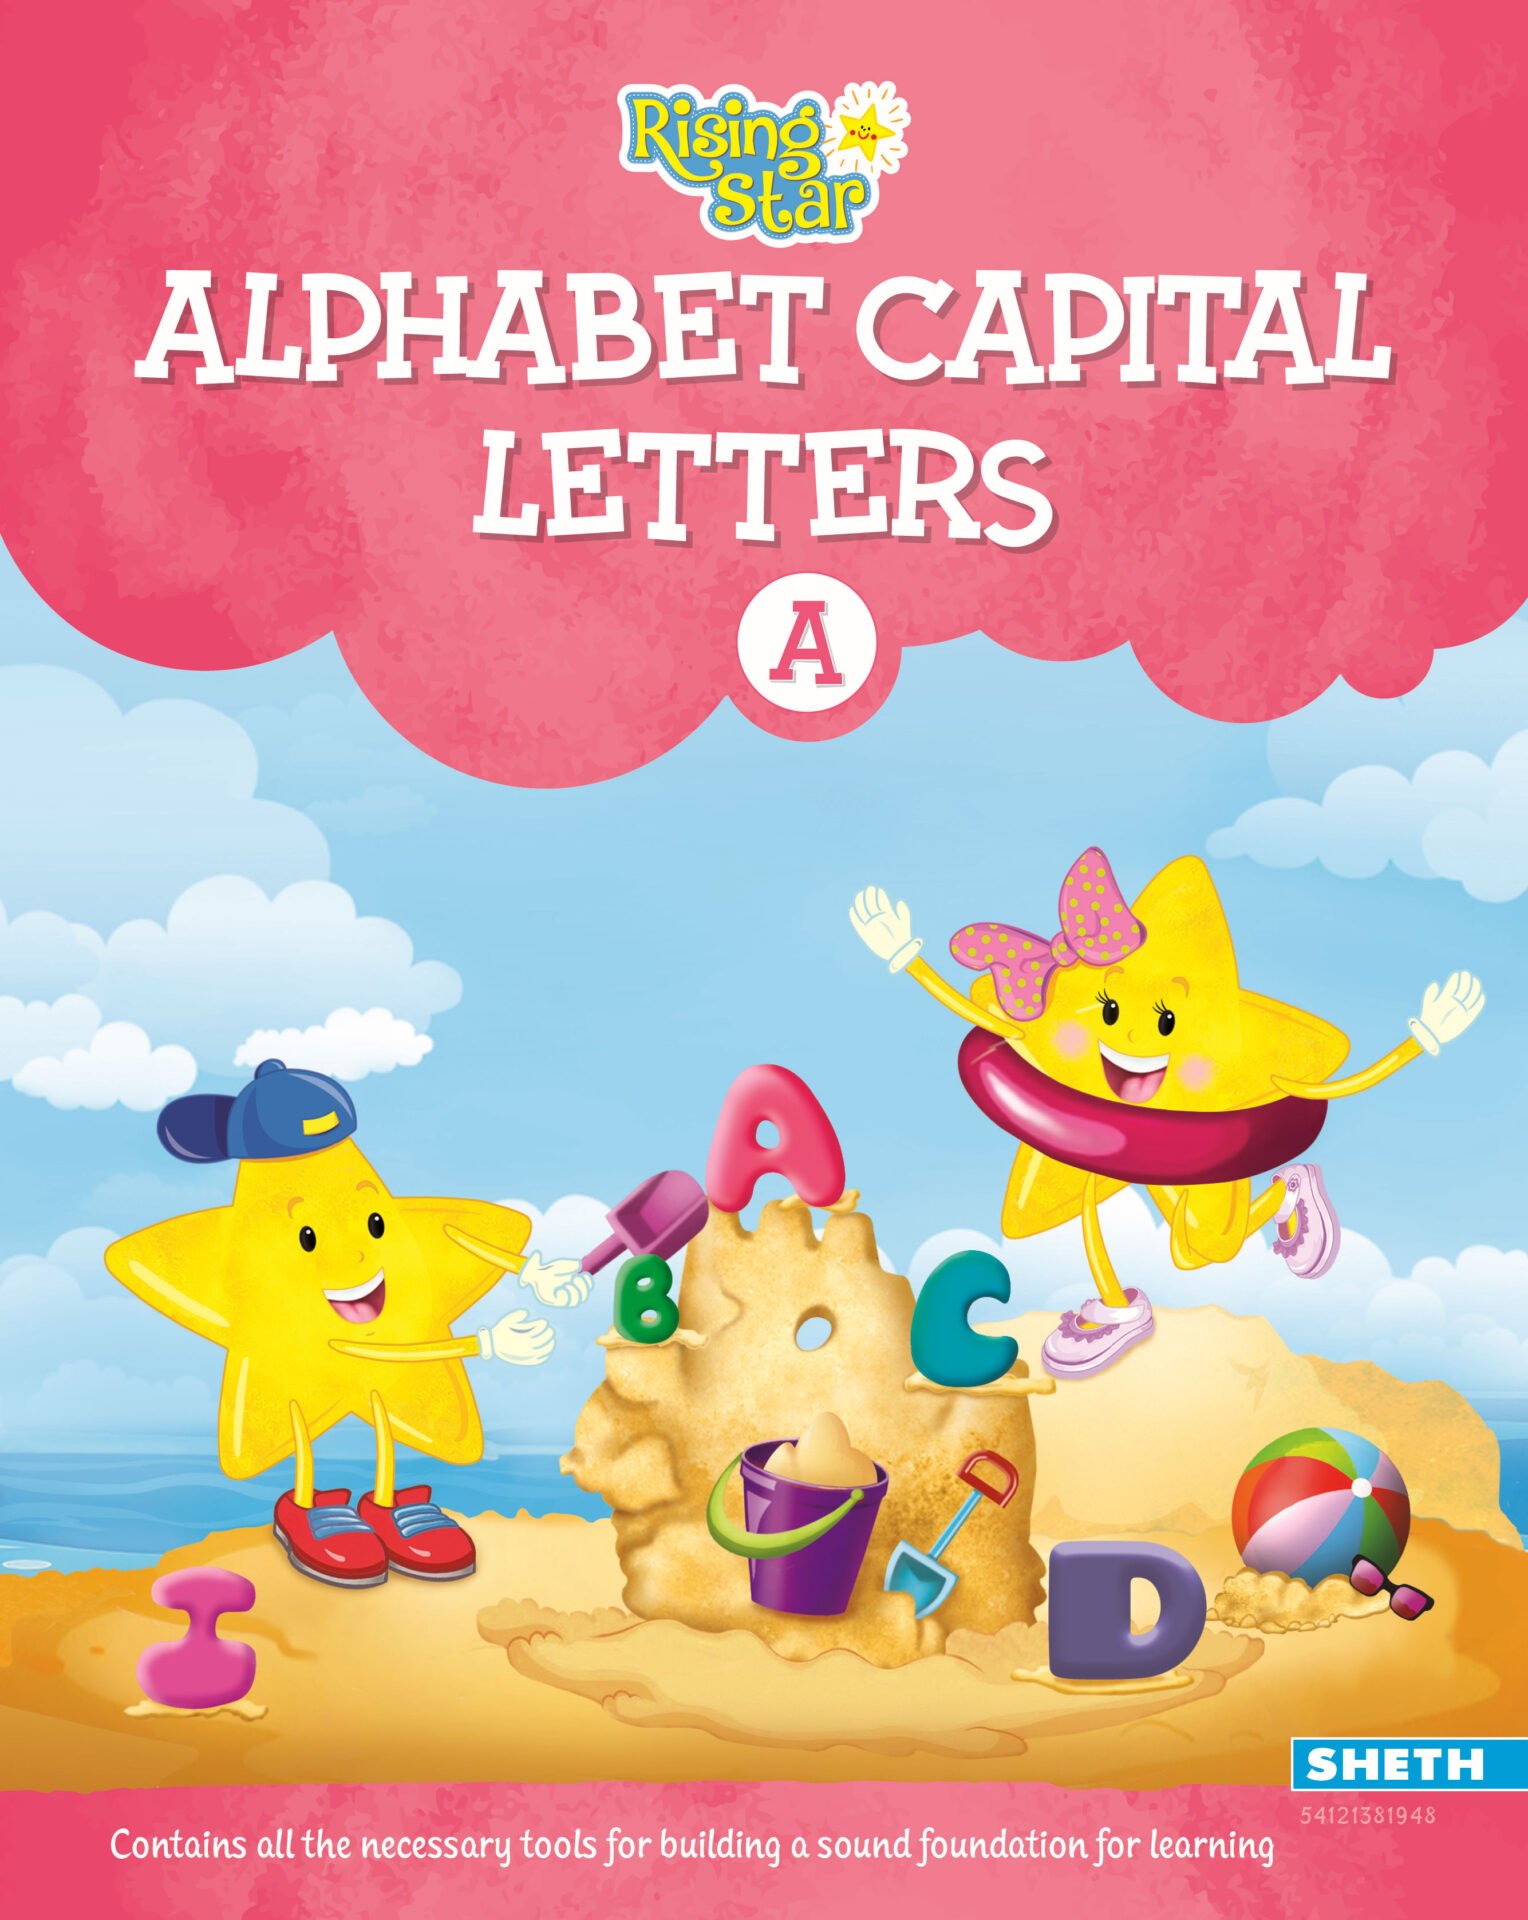 Rising Star Alphabet Capital Letter A 01 1